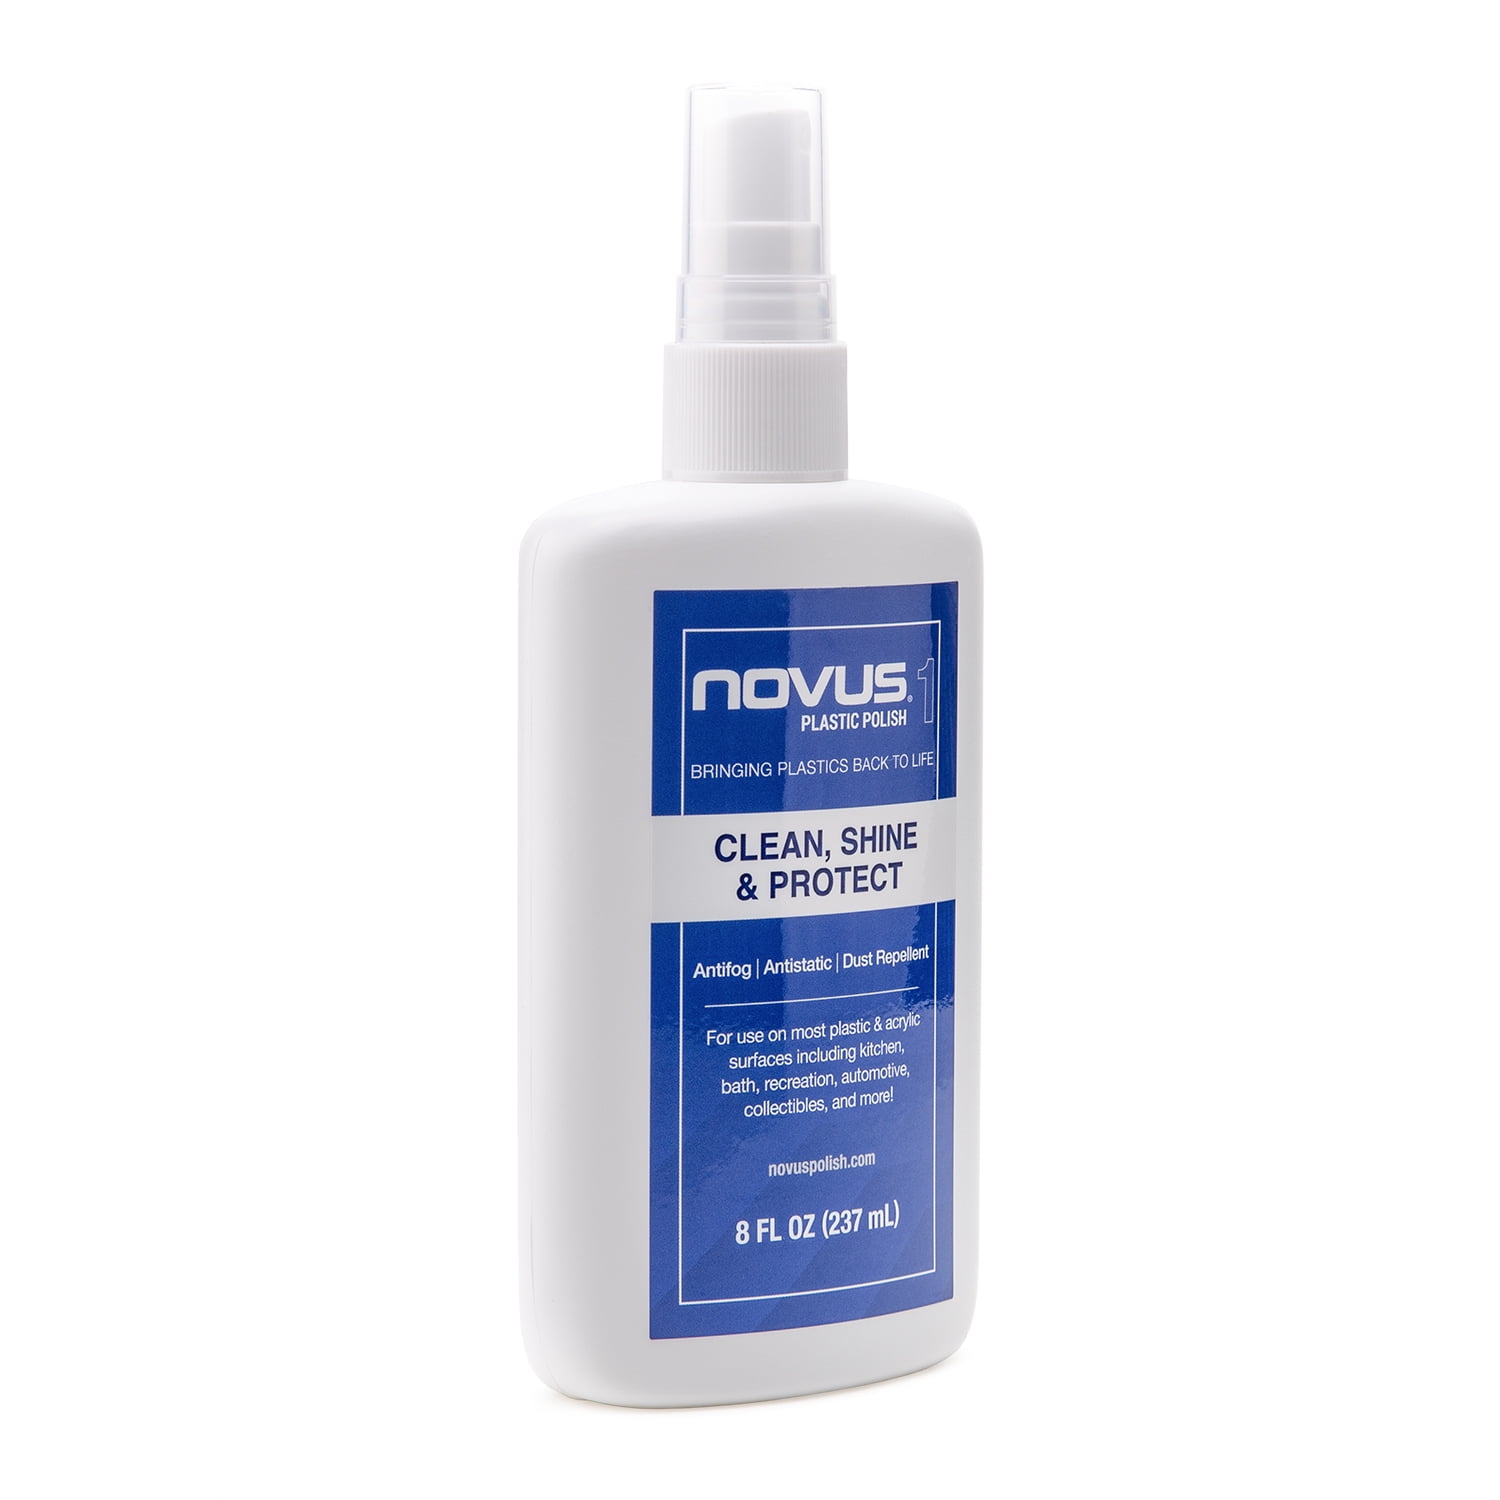 Novus PC-10 Plastic Clean & Shine - 8 oz